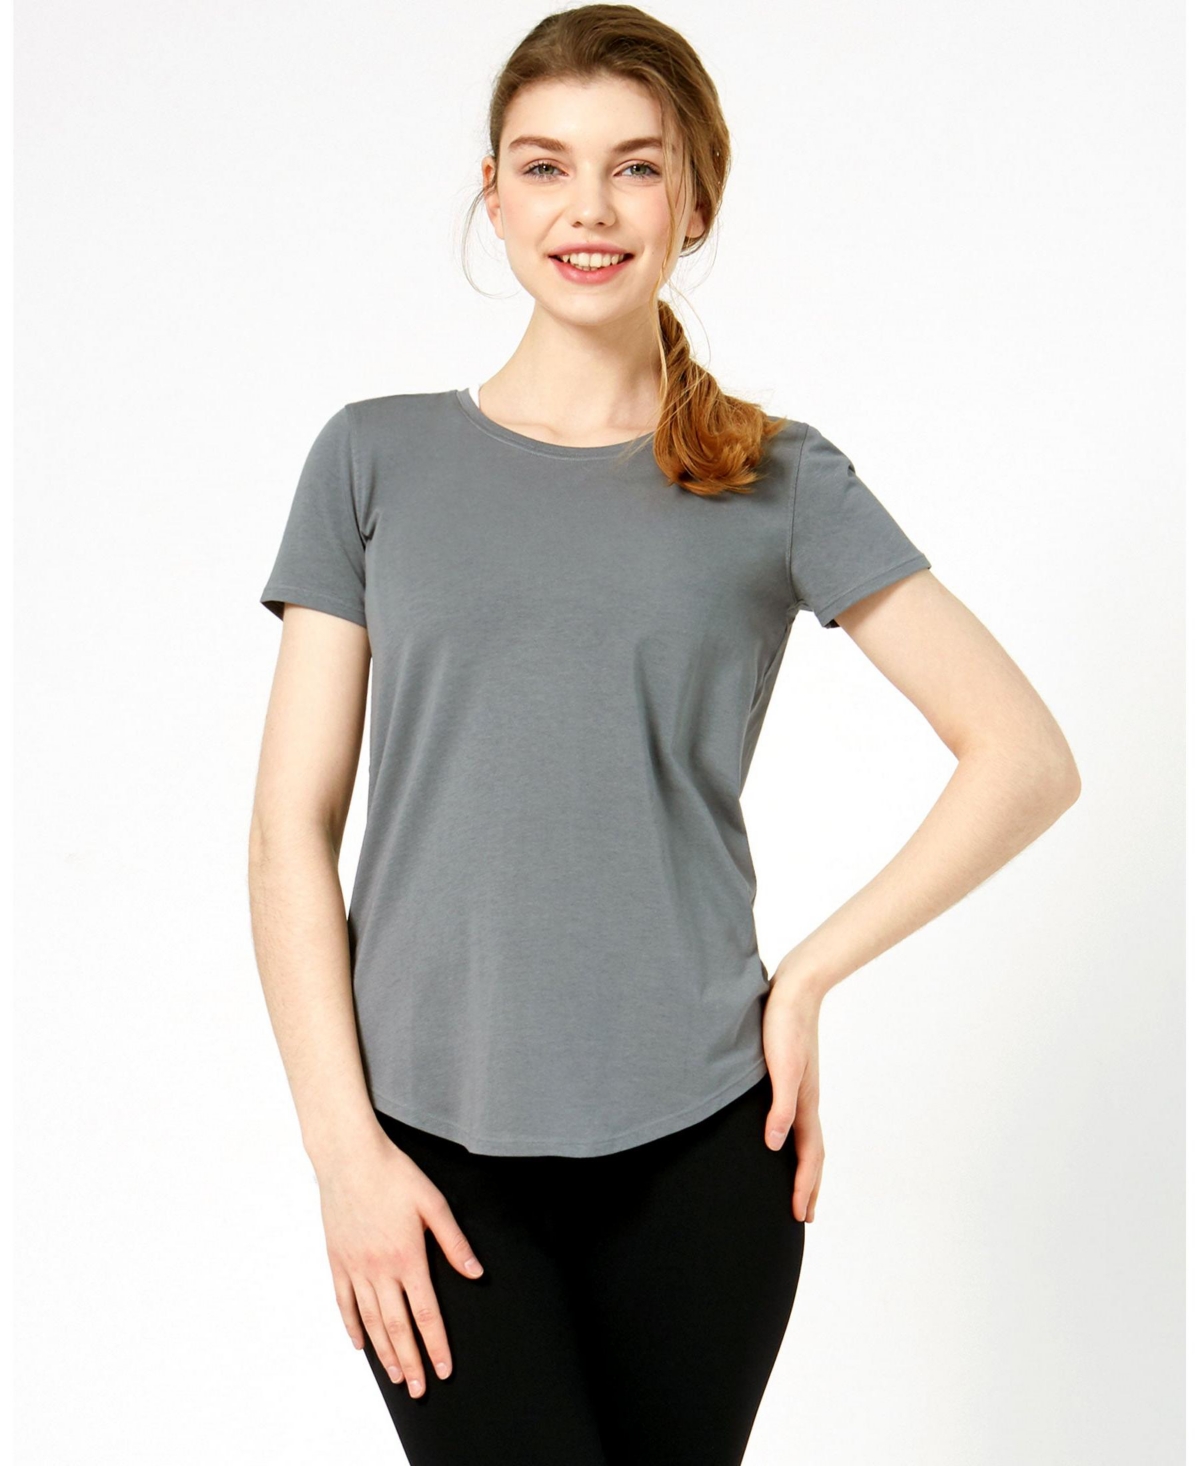 Rebody Essentials Scooped Short Sleeve Top For Women - Ice grey